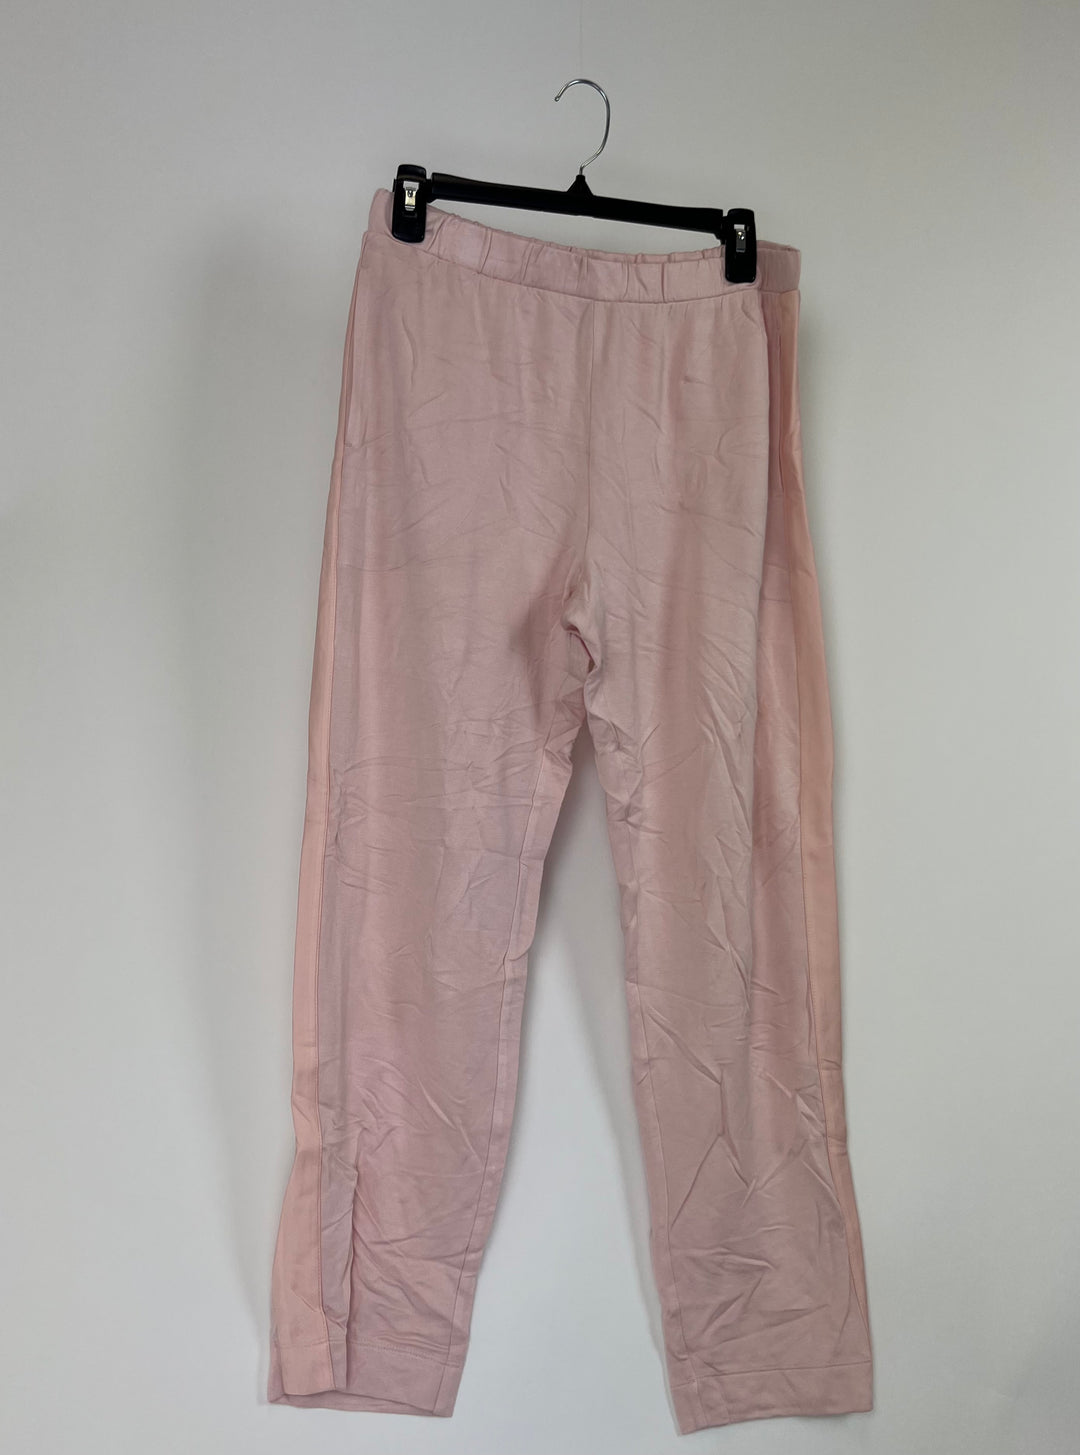 Pink Sleepwear Pants - Small